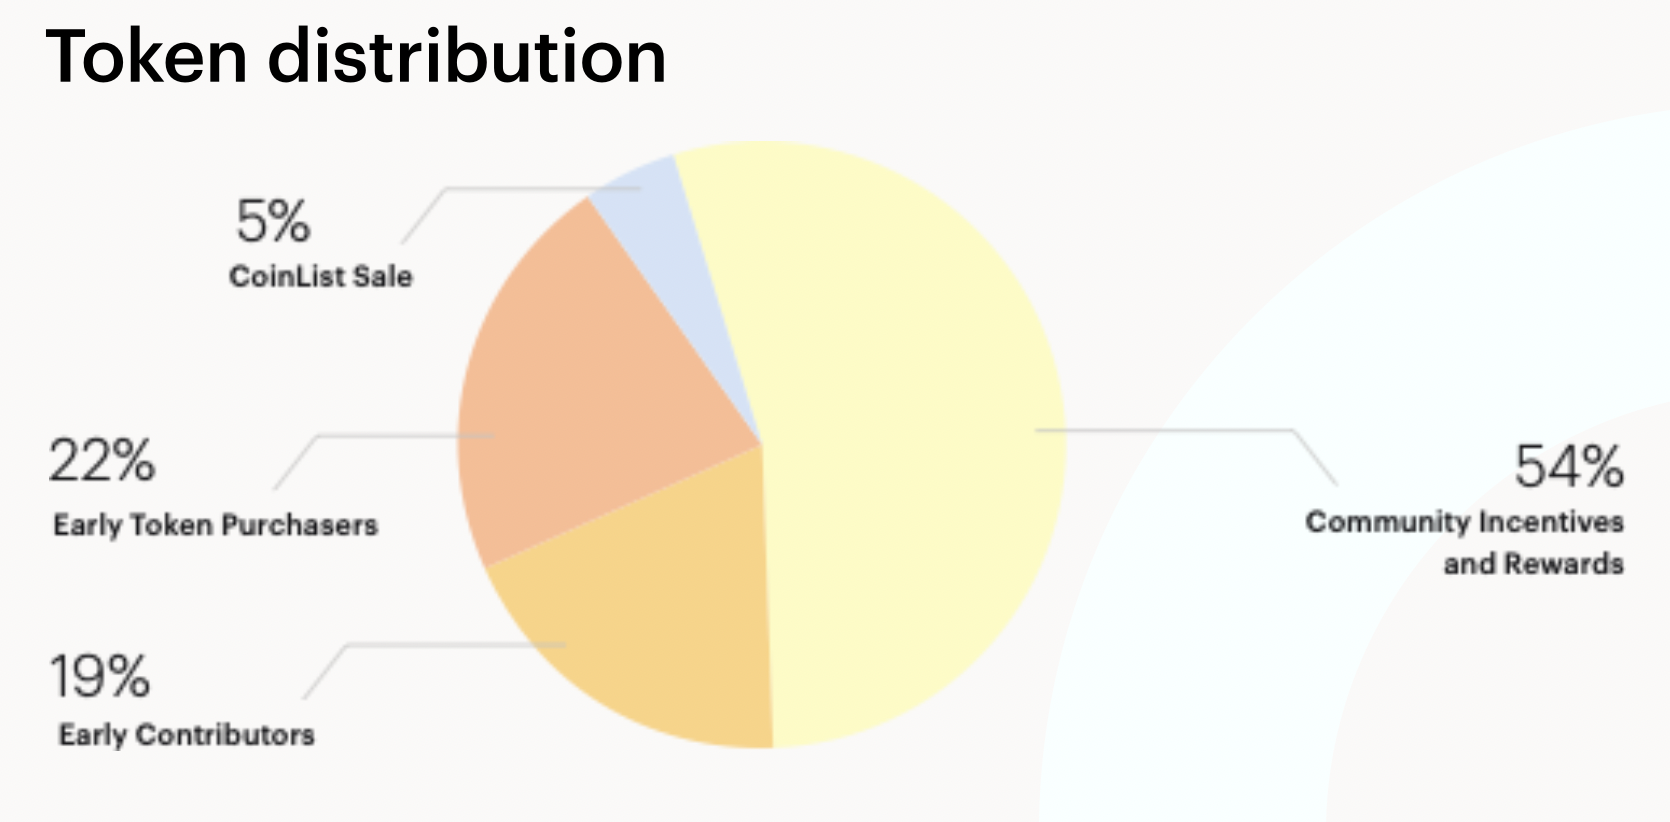 BTRST Token distribution. Source: Braintrust tokenomics paper